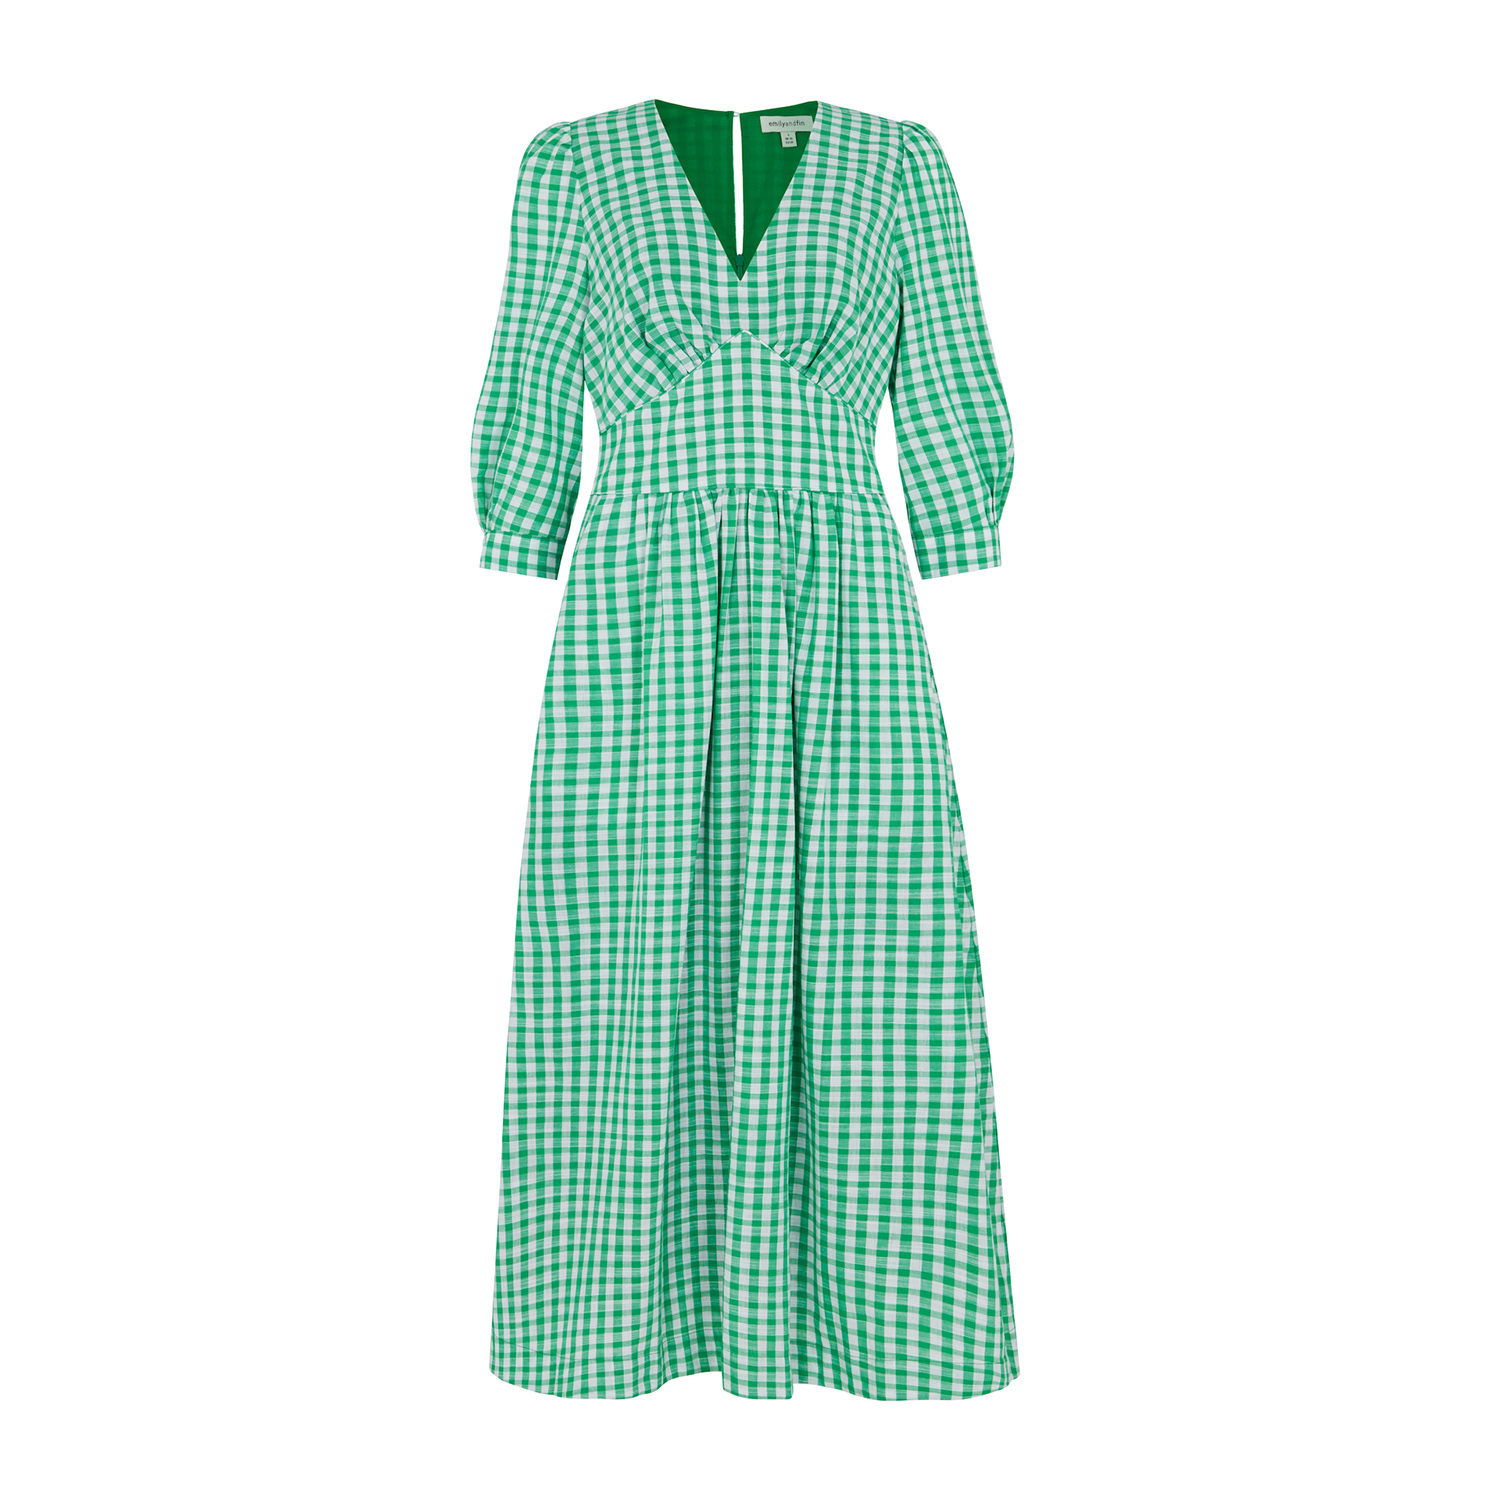 Emily And Fin Women's Green / White Amelia Emerald Green Gingham Dress